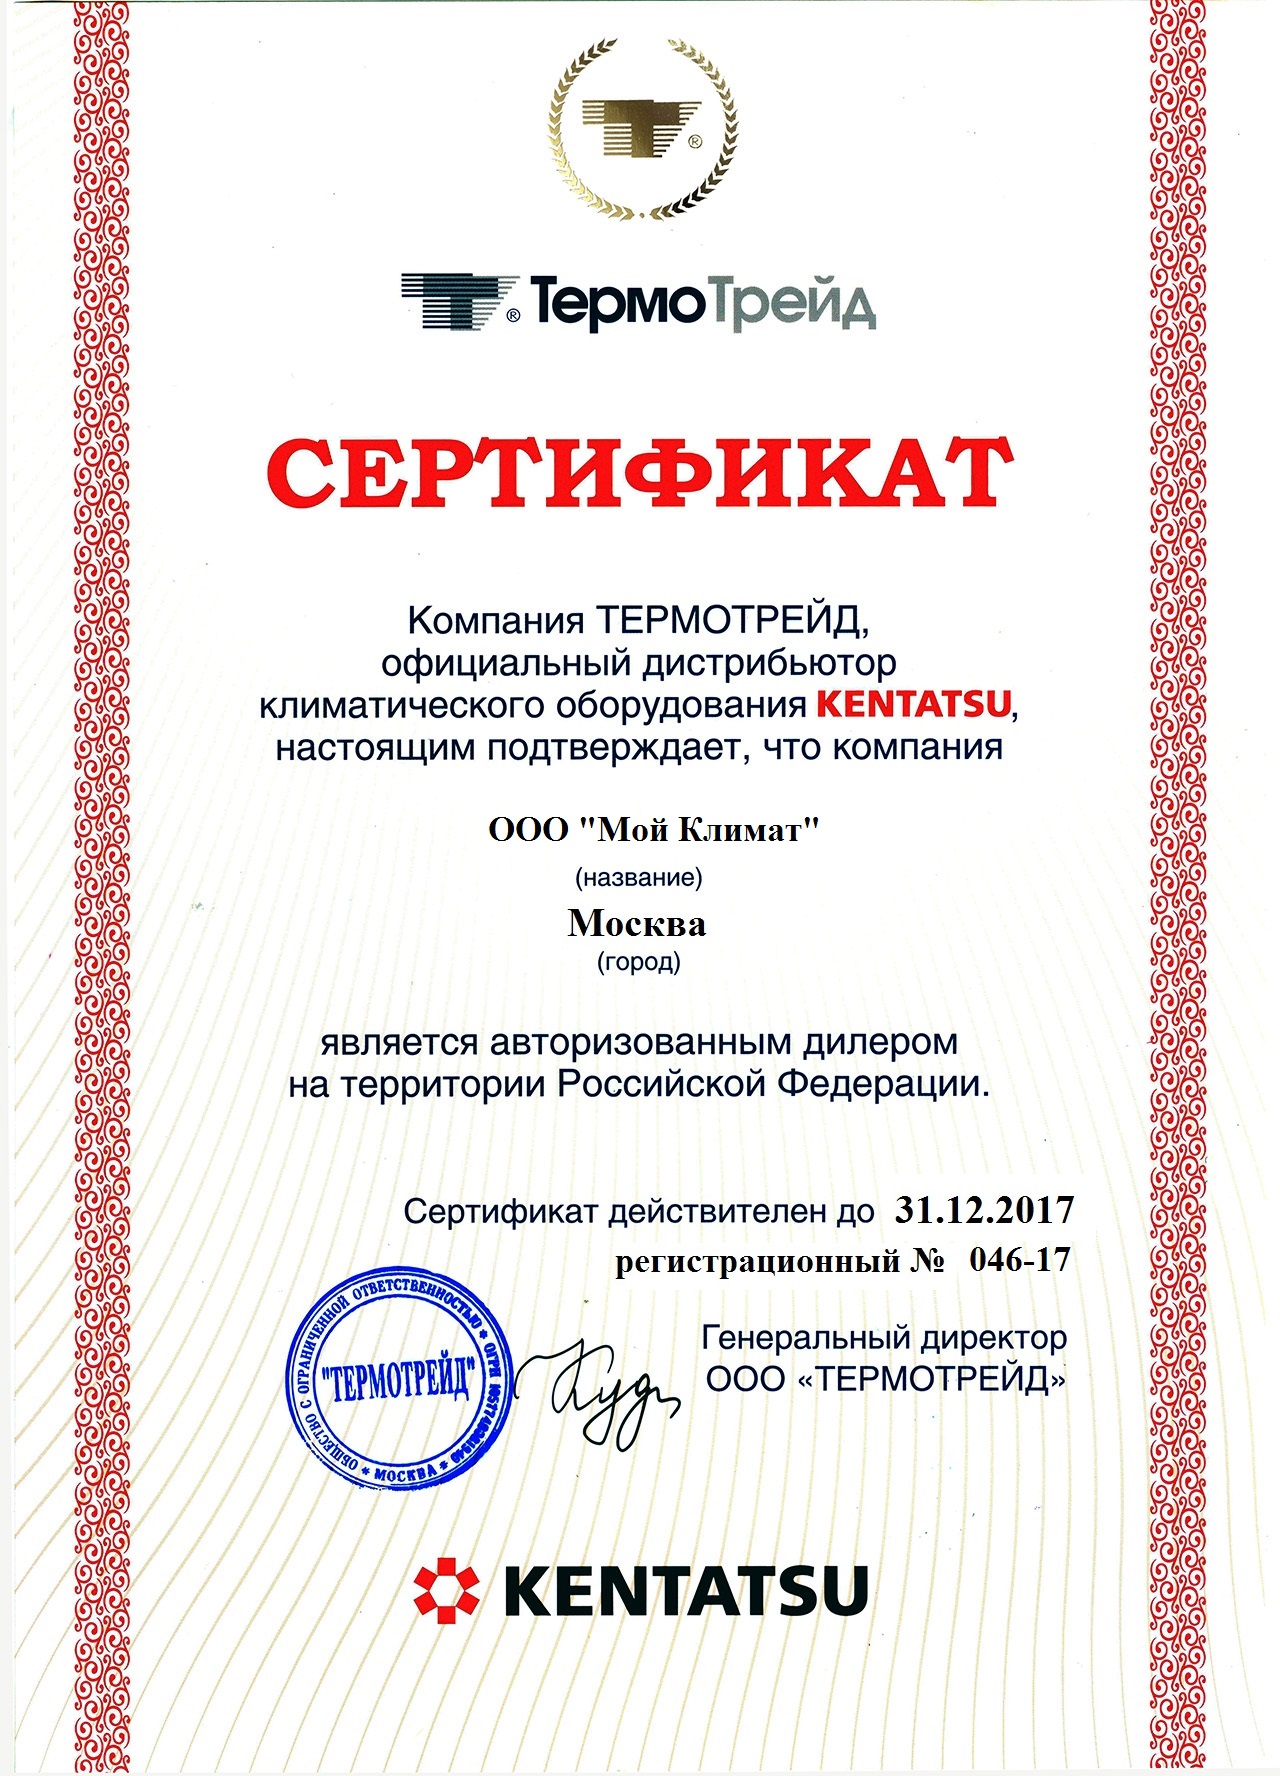 Сертификат Kentatsu